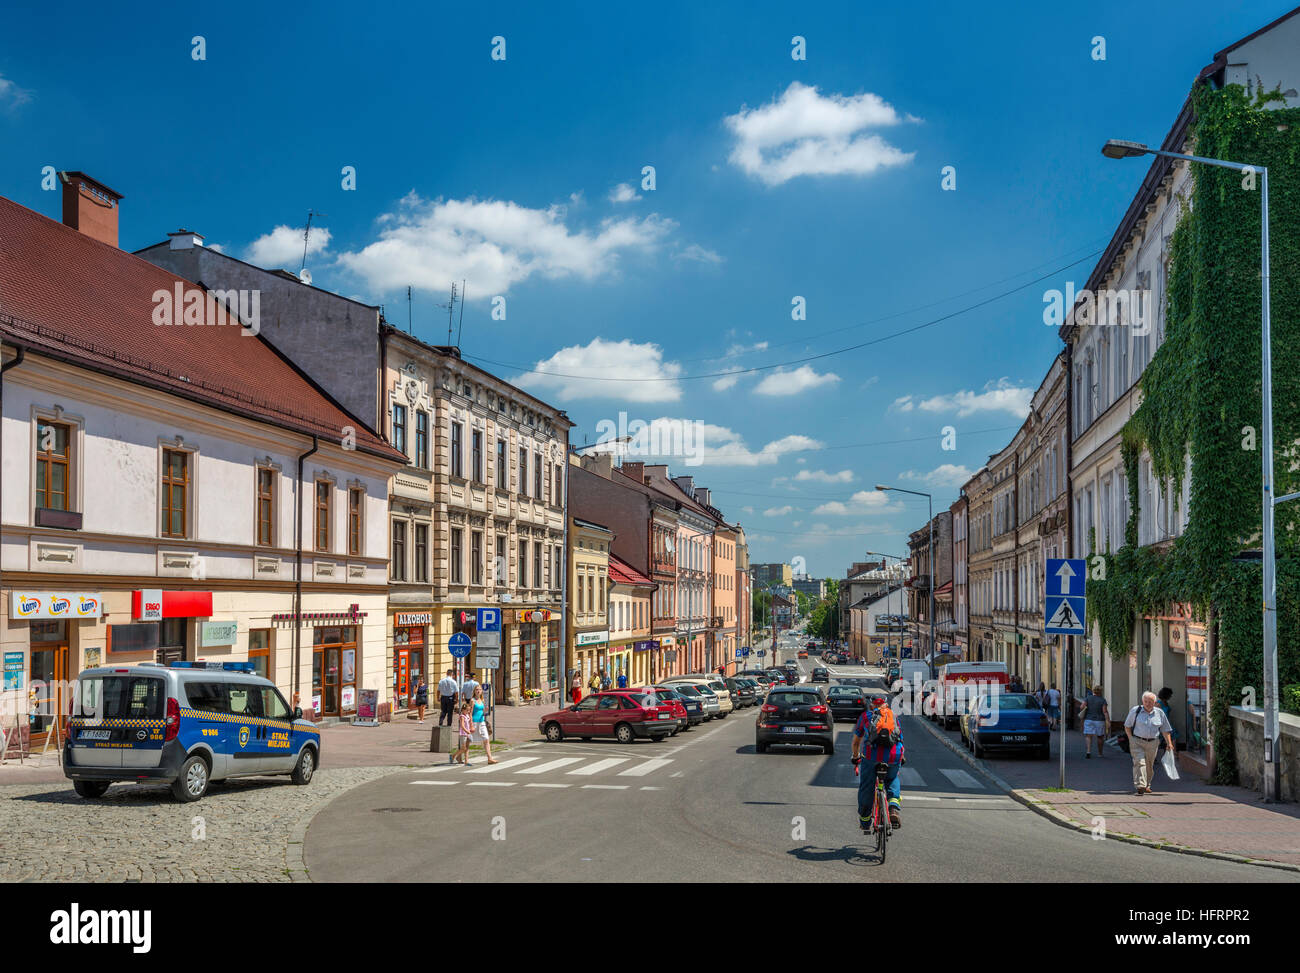 Ulica Lwowska in Tarnow, Malopolska, Poland Stock Photo